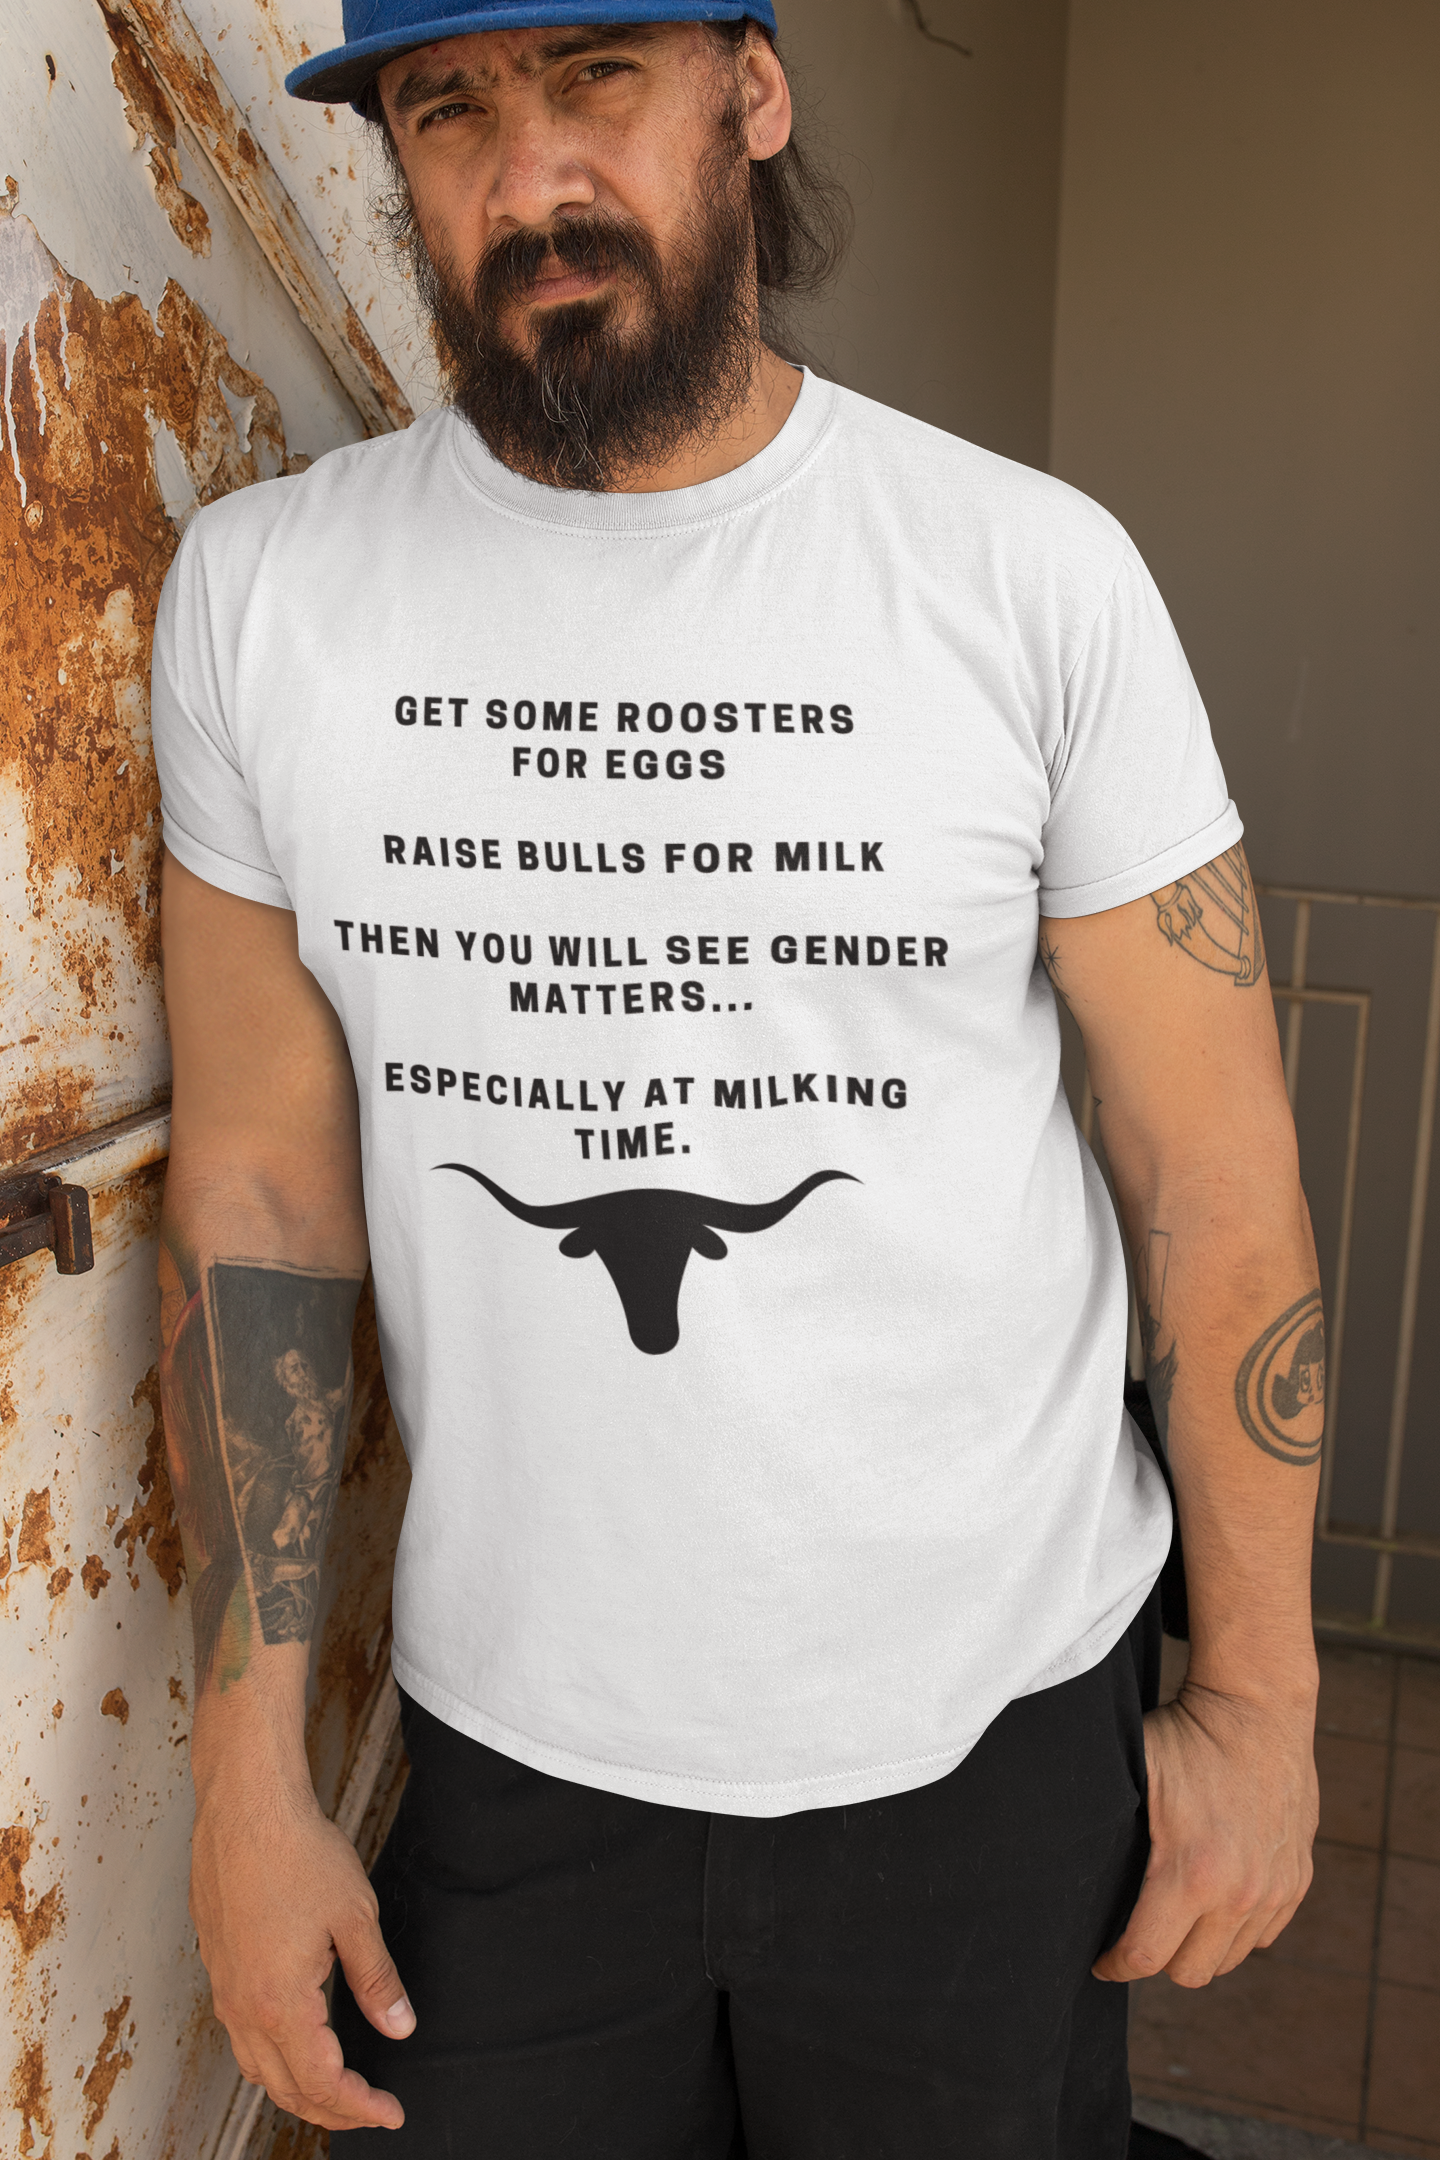 Funny Mens Shirt, Sarcastic Shirt For Men, Novelty Shirts, Offensive Shirt Milk A Bull Gender Matters Unisex Tee o man